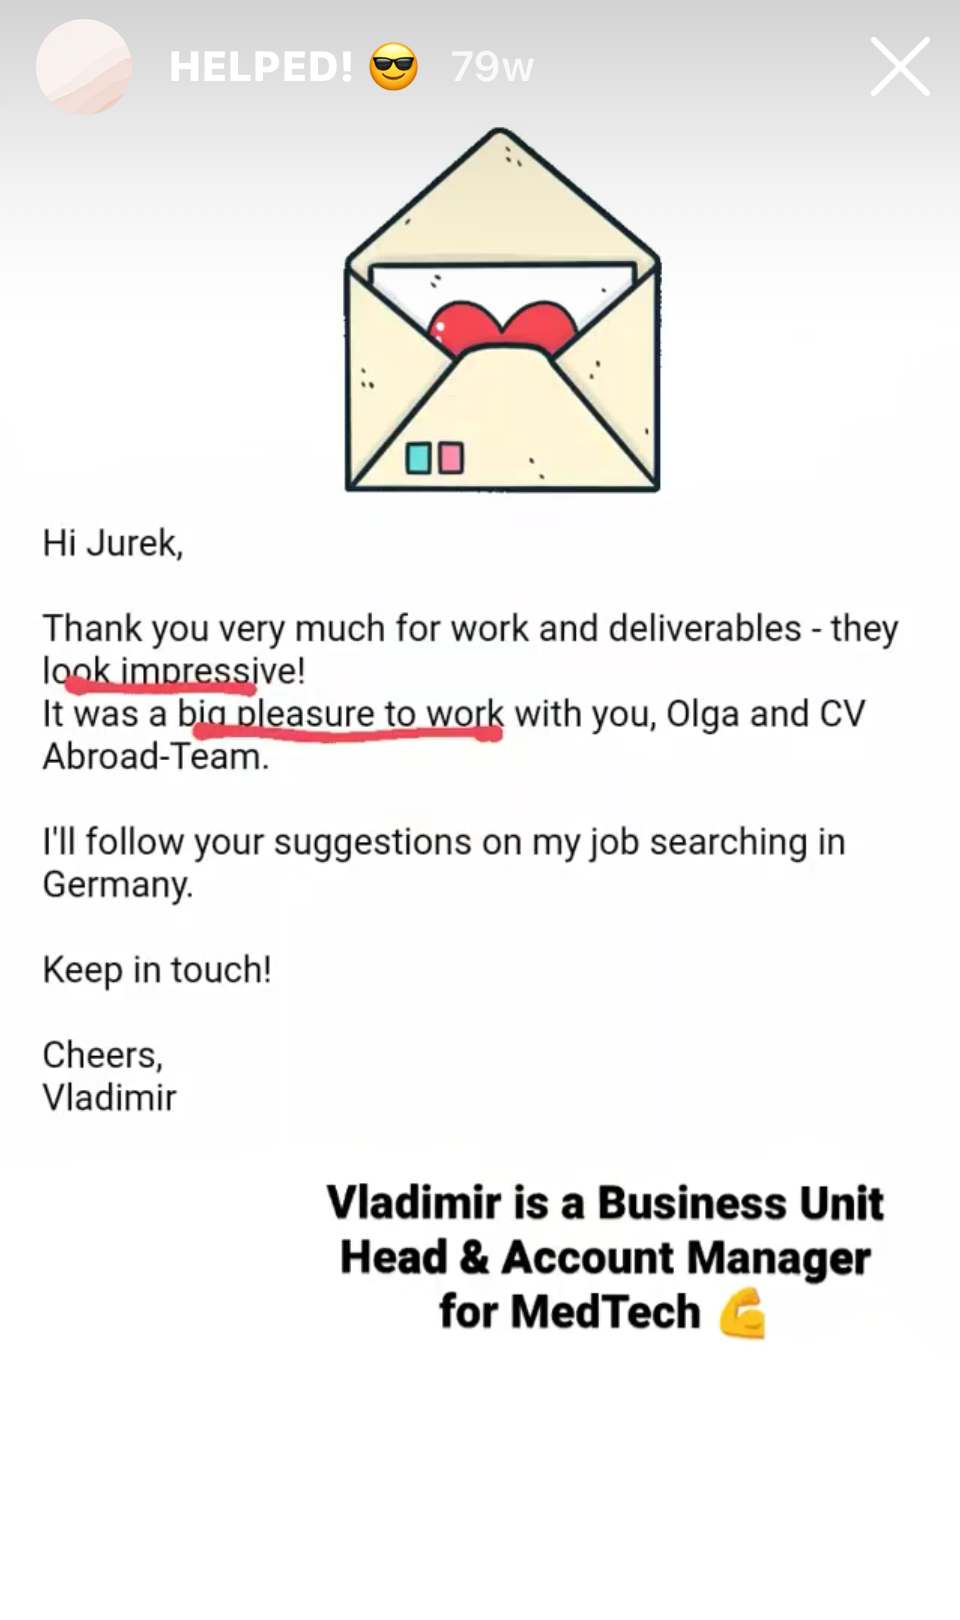 Vladimir, Business Unit Head MedTech